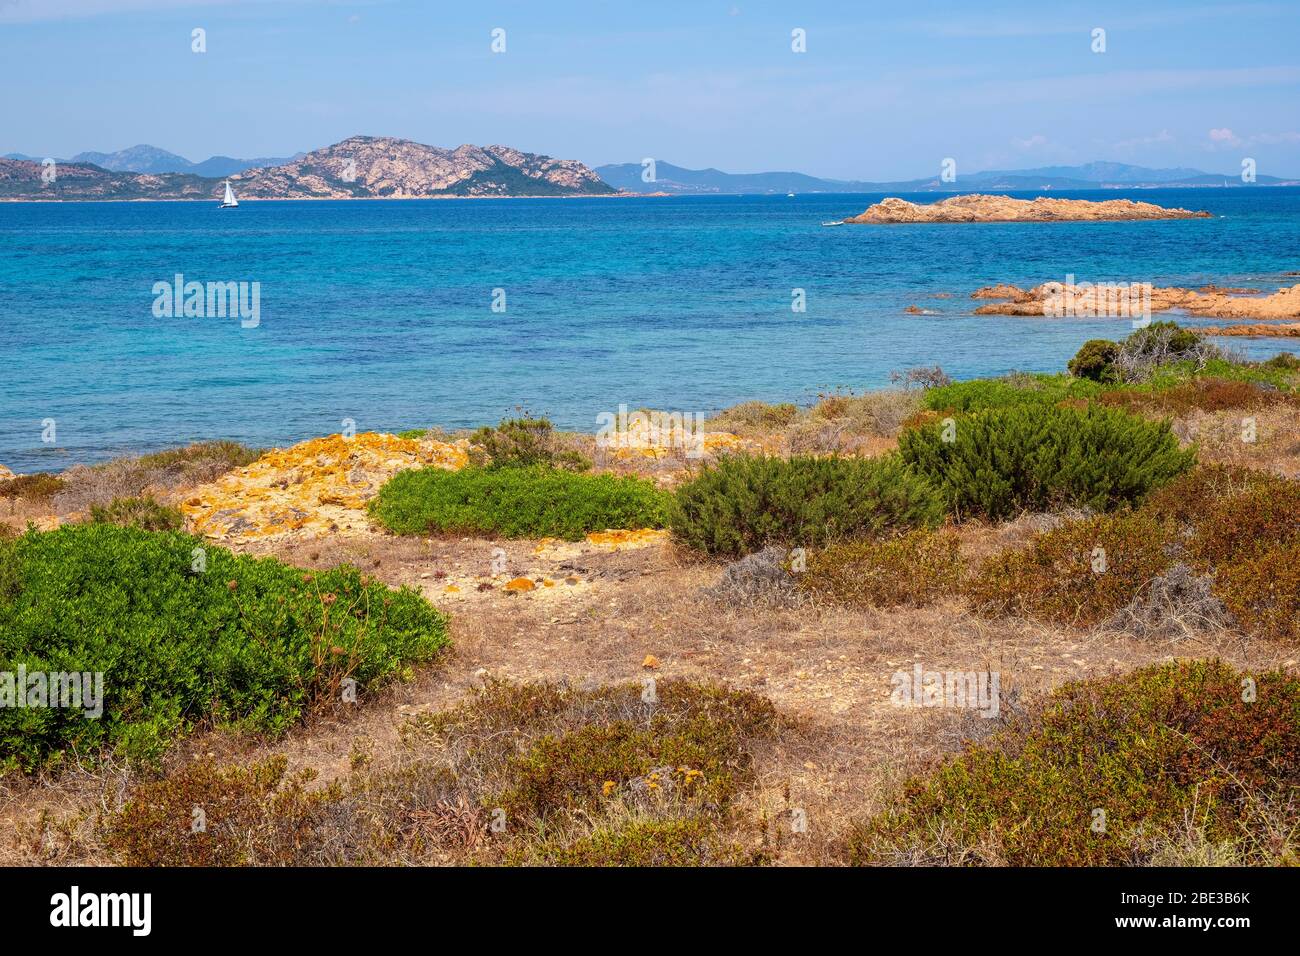 Panoramic view of Spalmatore di Terra peninsula of Marine Protected Area reserve with seashore rocks of Isola Tavolara island on Tyrrhenian Sea Stock Photo